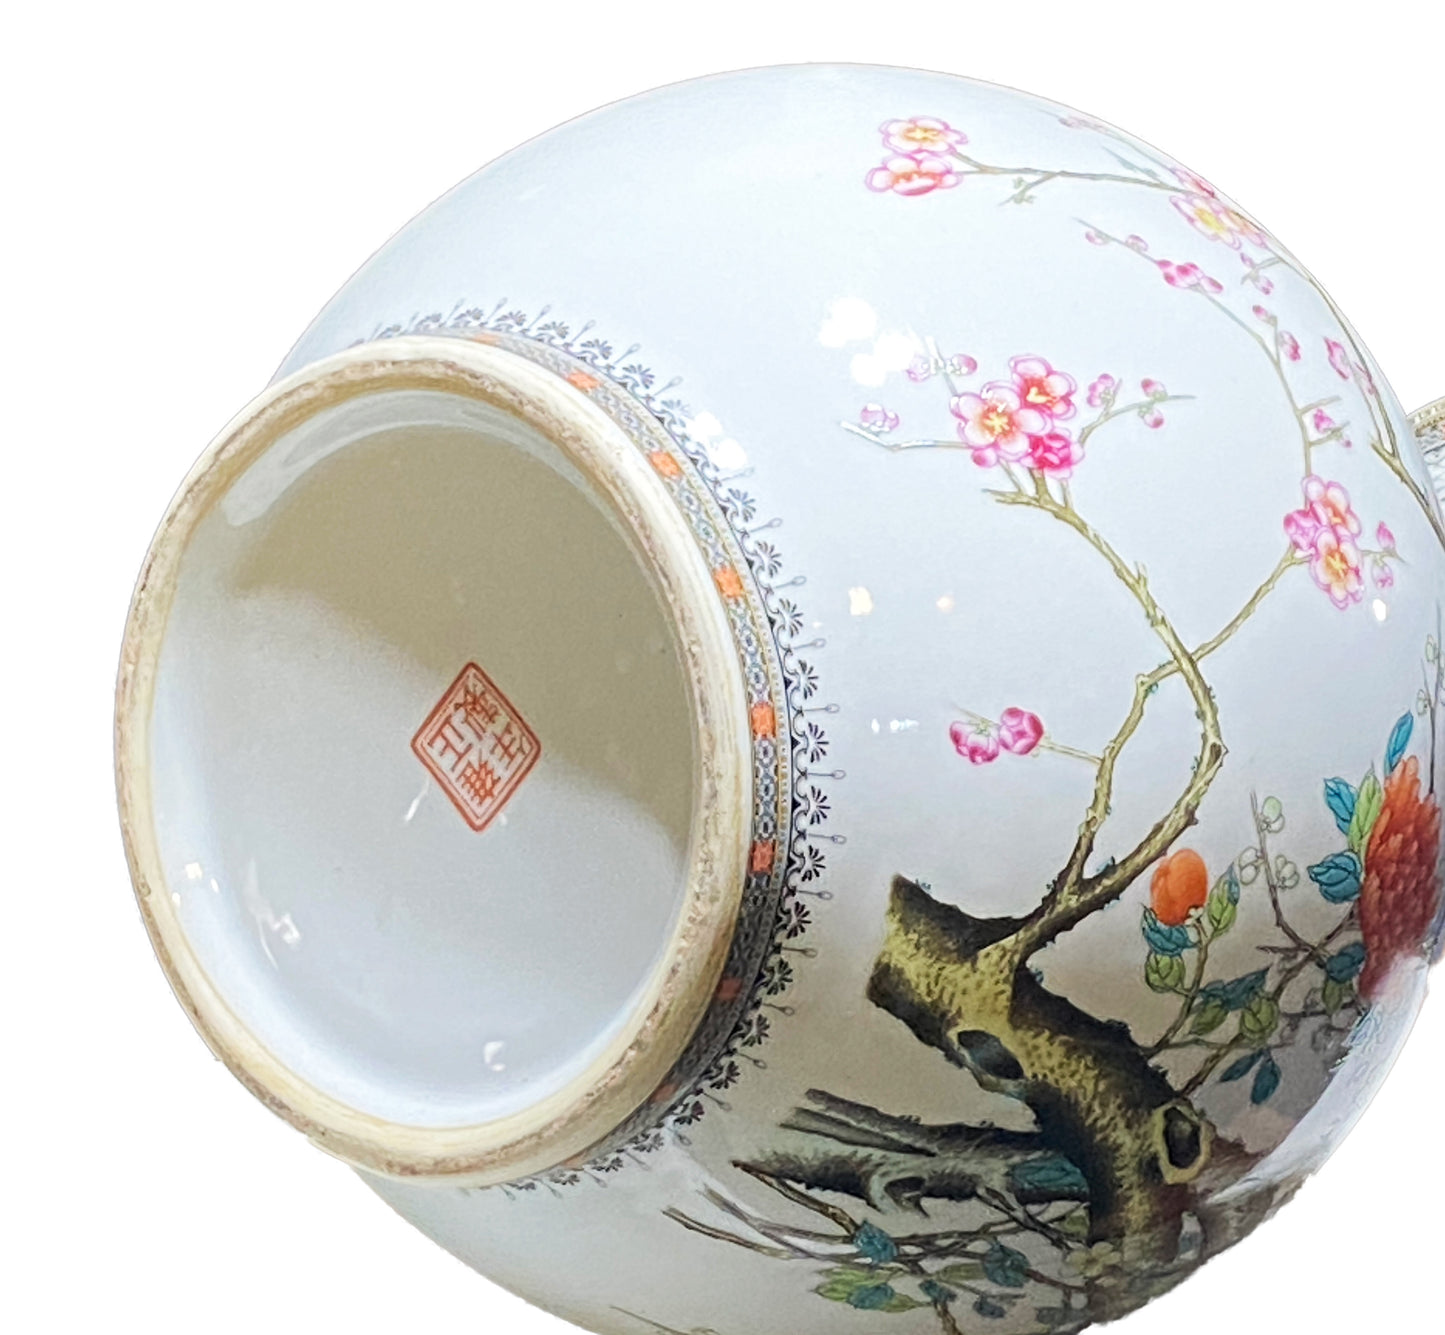 # 3478 Large Chinoiserie  Porcelain Onion Shaped Vase 22.5" H